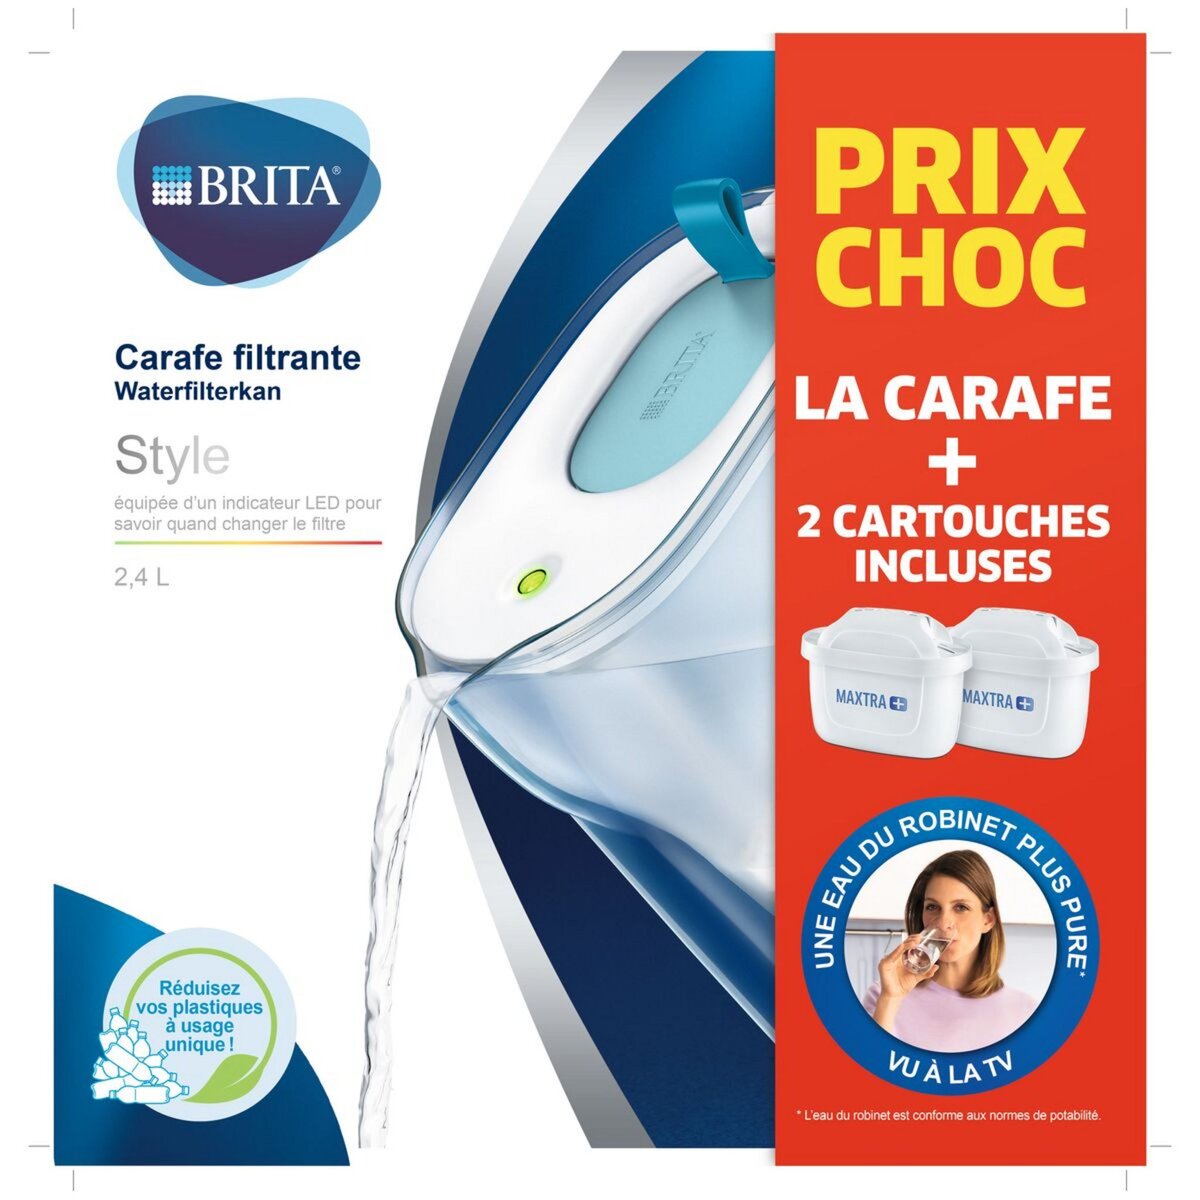 BRITA Carafe filtrante Marella bleue (2,4L) inclus 1 cartouche MAXTRA